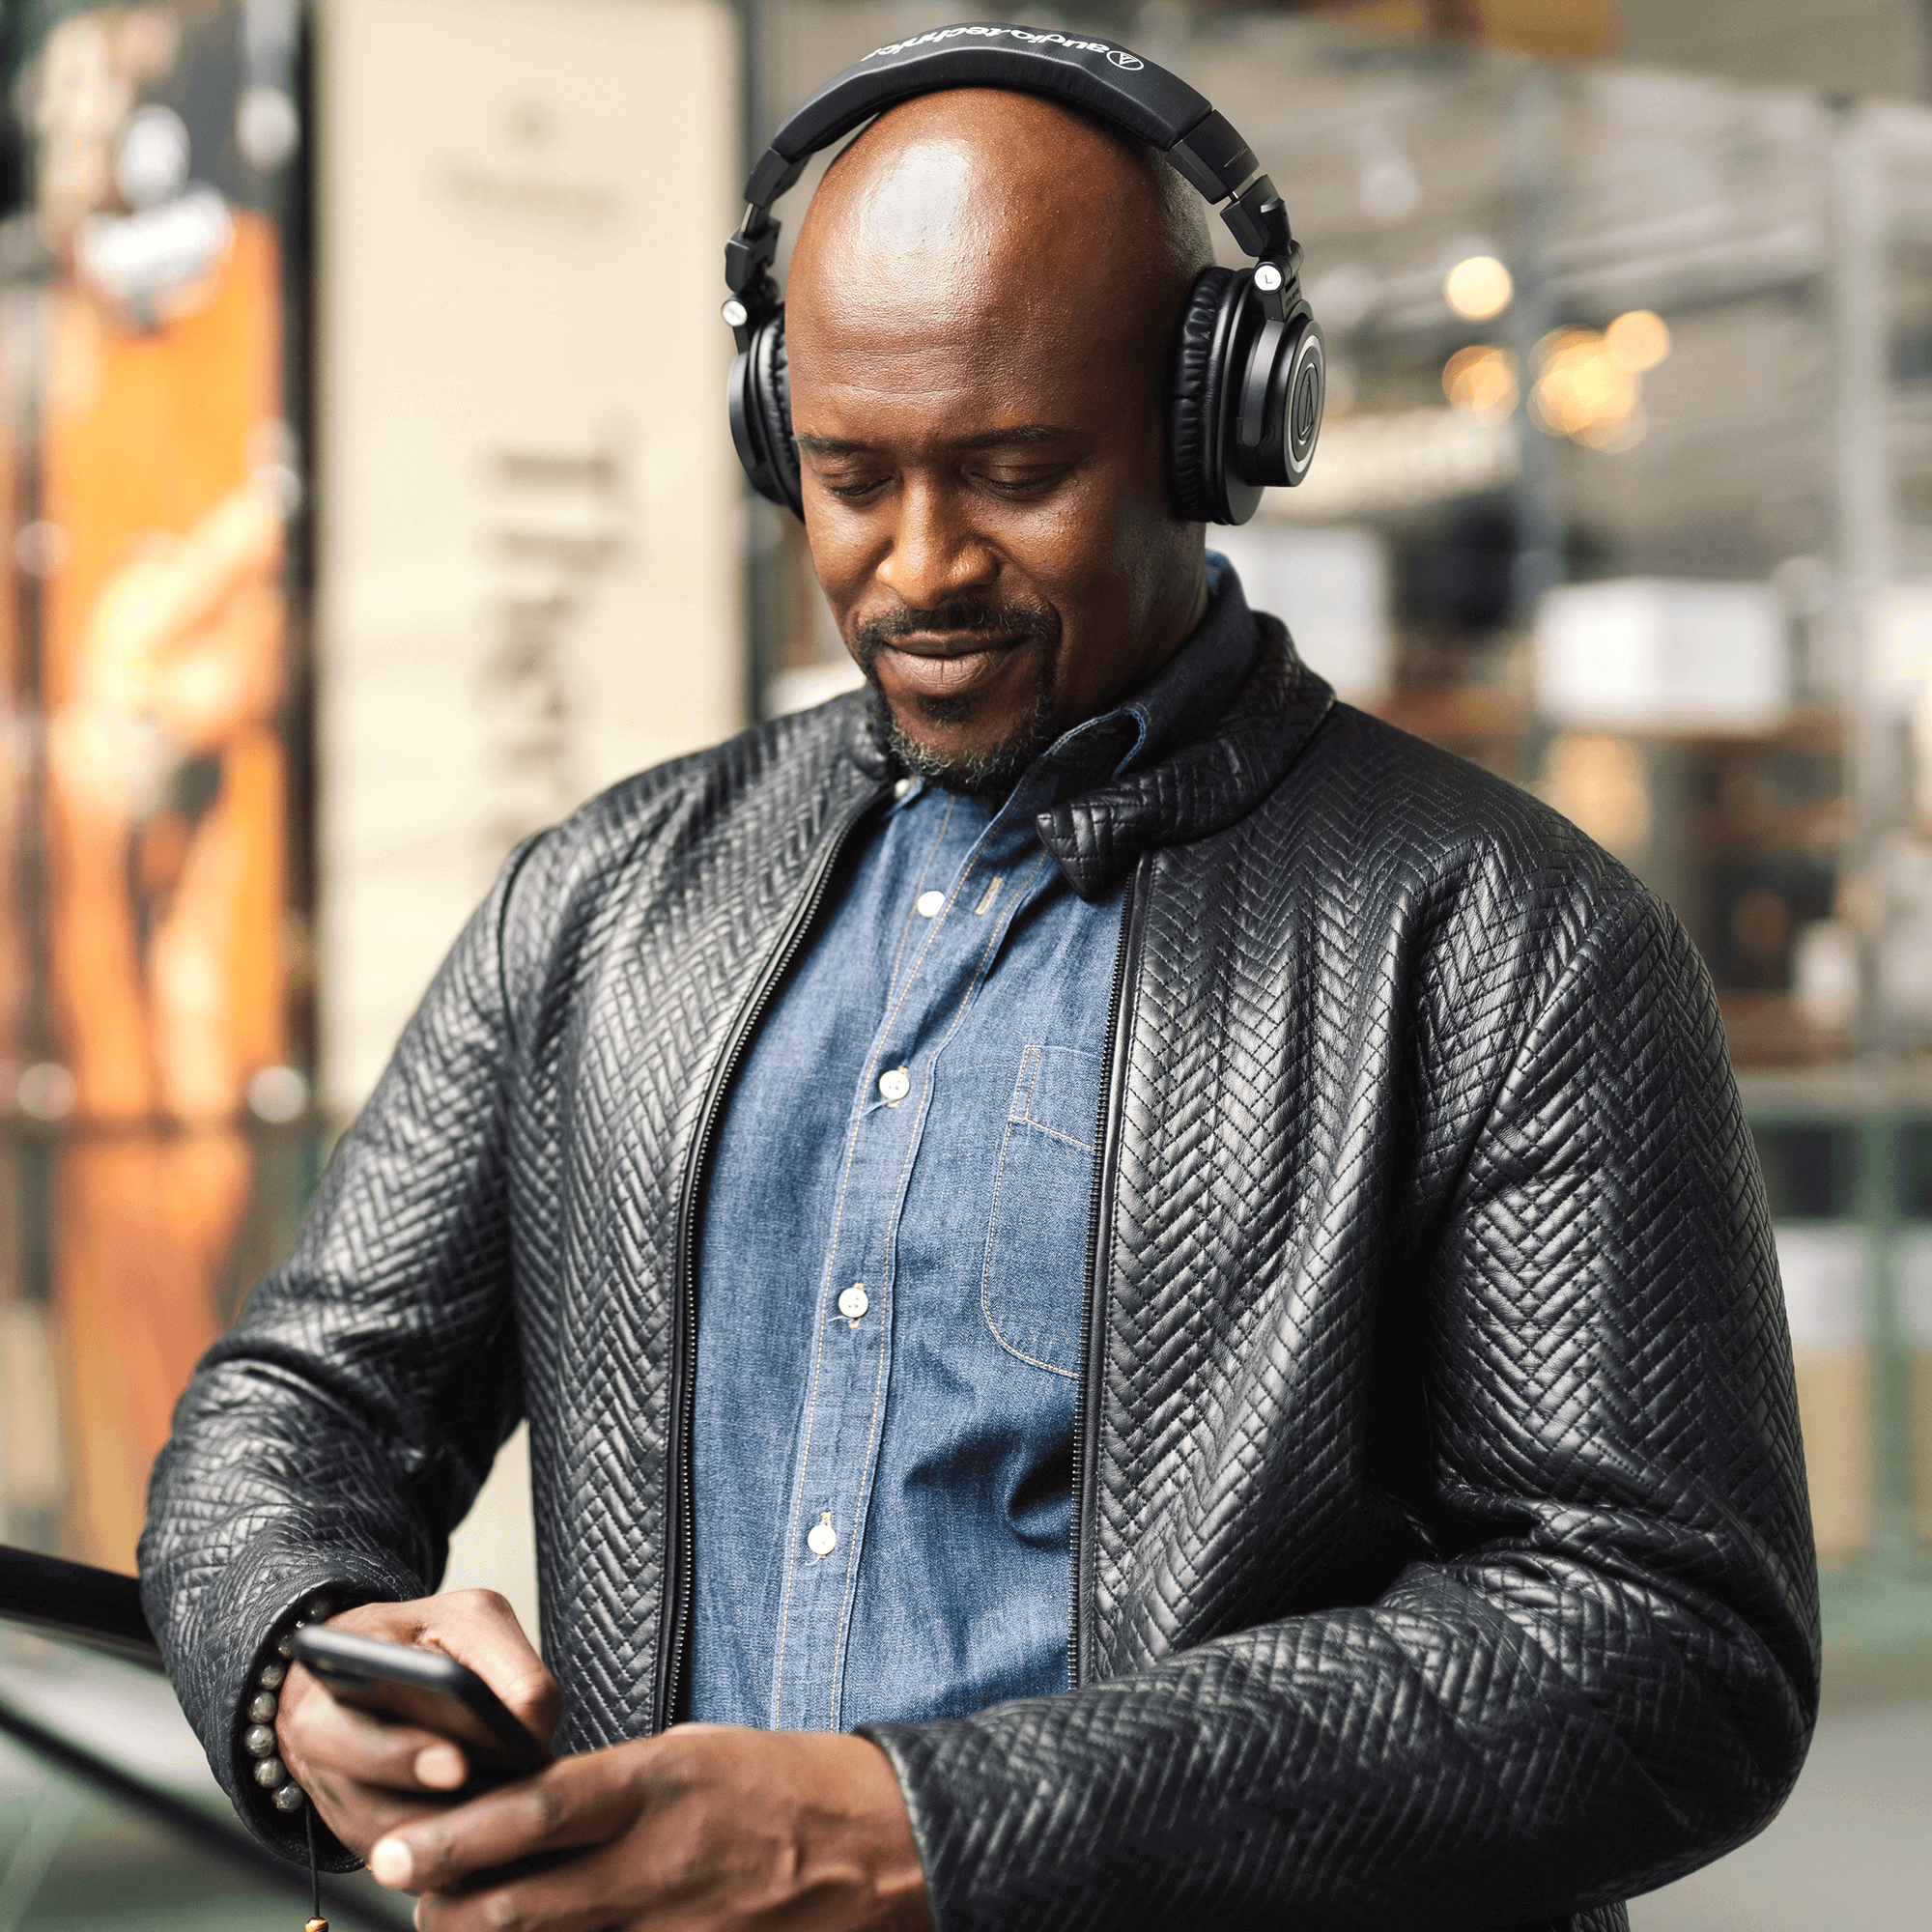 Audiófonos AUDIO-TECHNICA ATH-M50XBT2 con Bluetooth: Sonido Premium